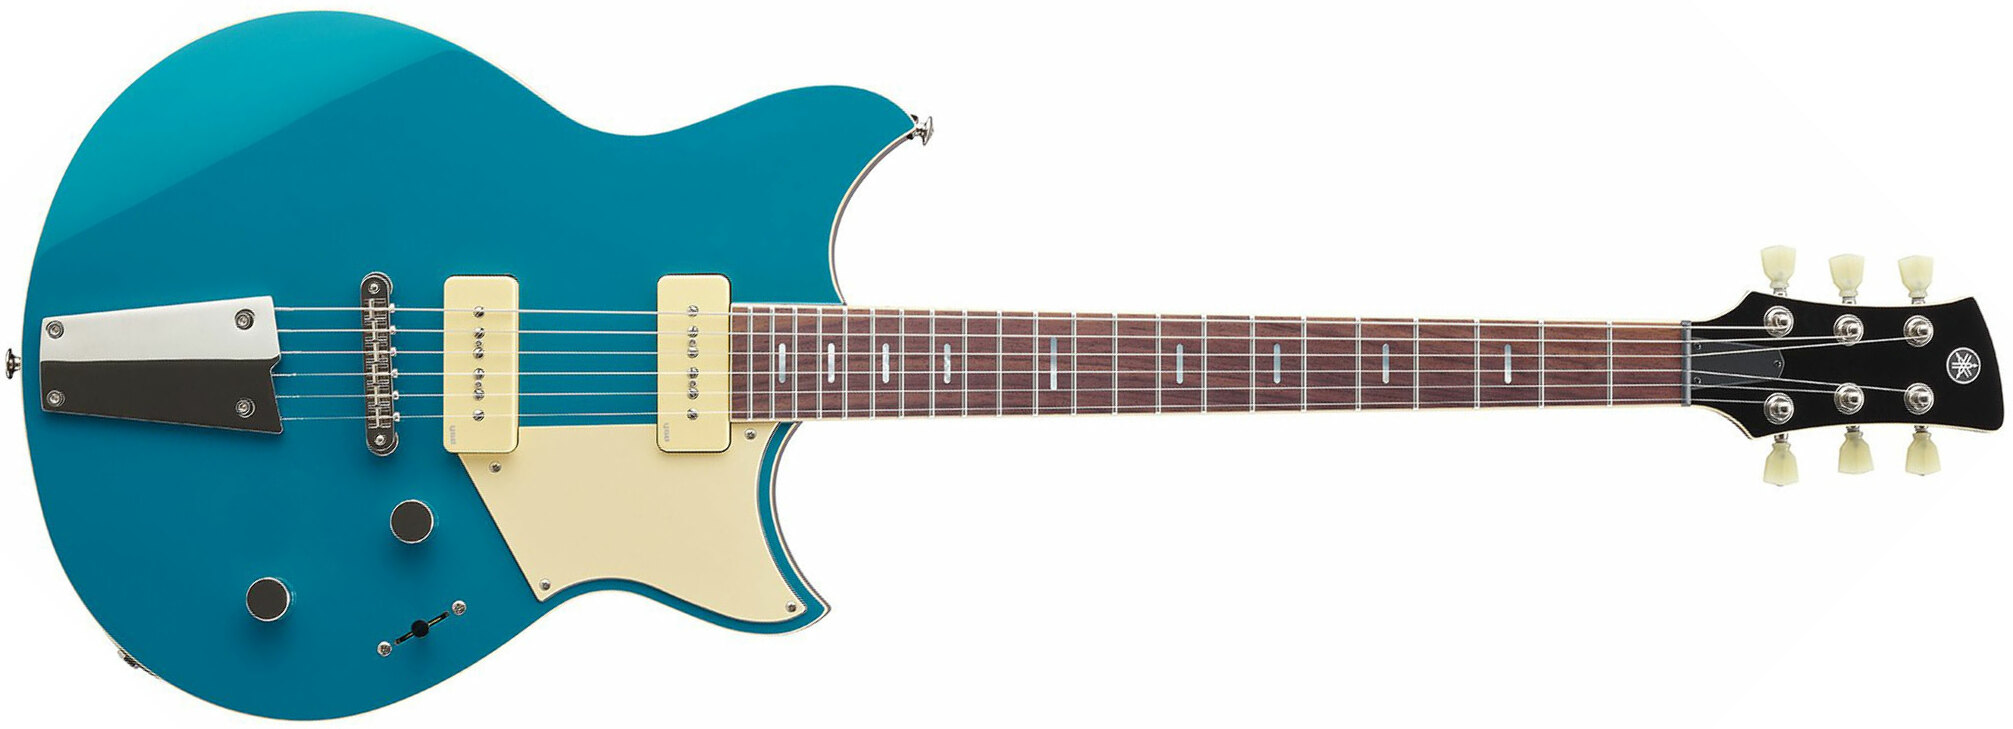 Yamaha Rss02t Revstar Standard 2p90 Ht Rw - Swift Blue - Double cut electric guitar - Main picture